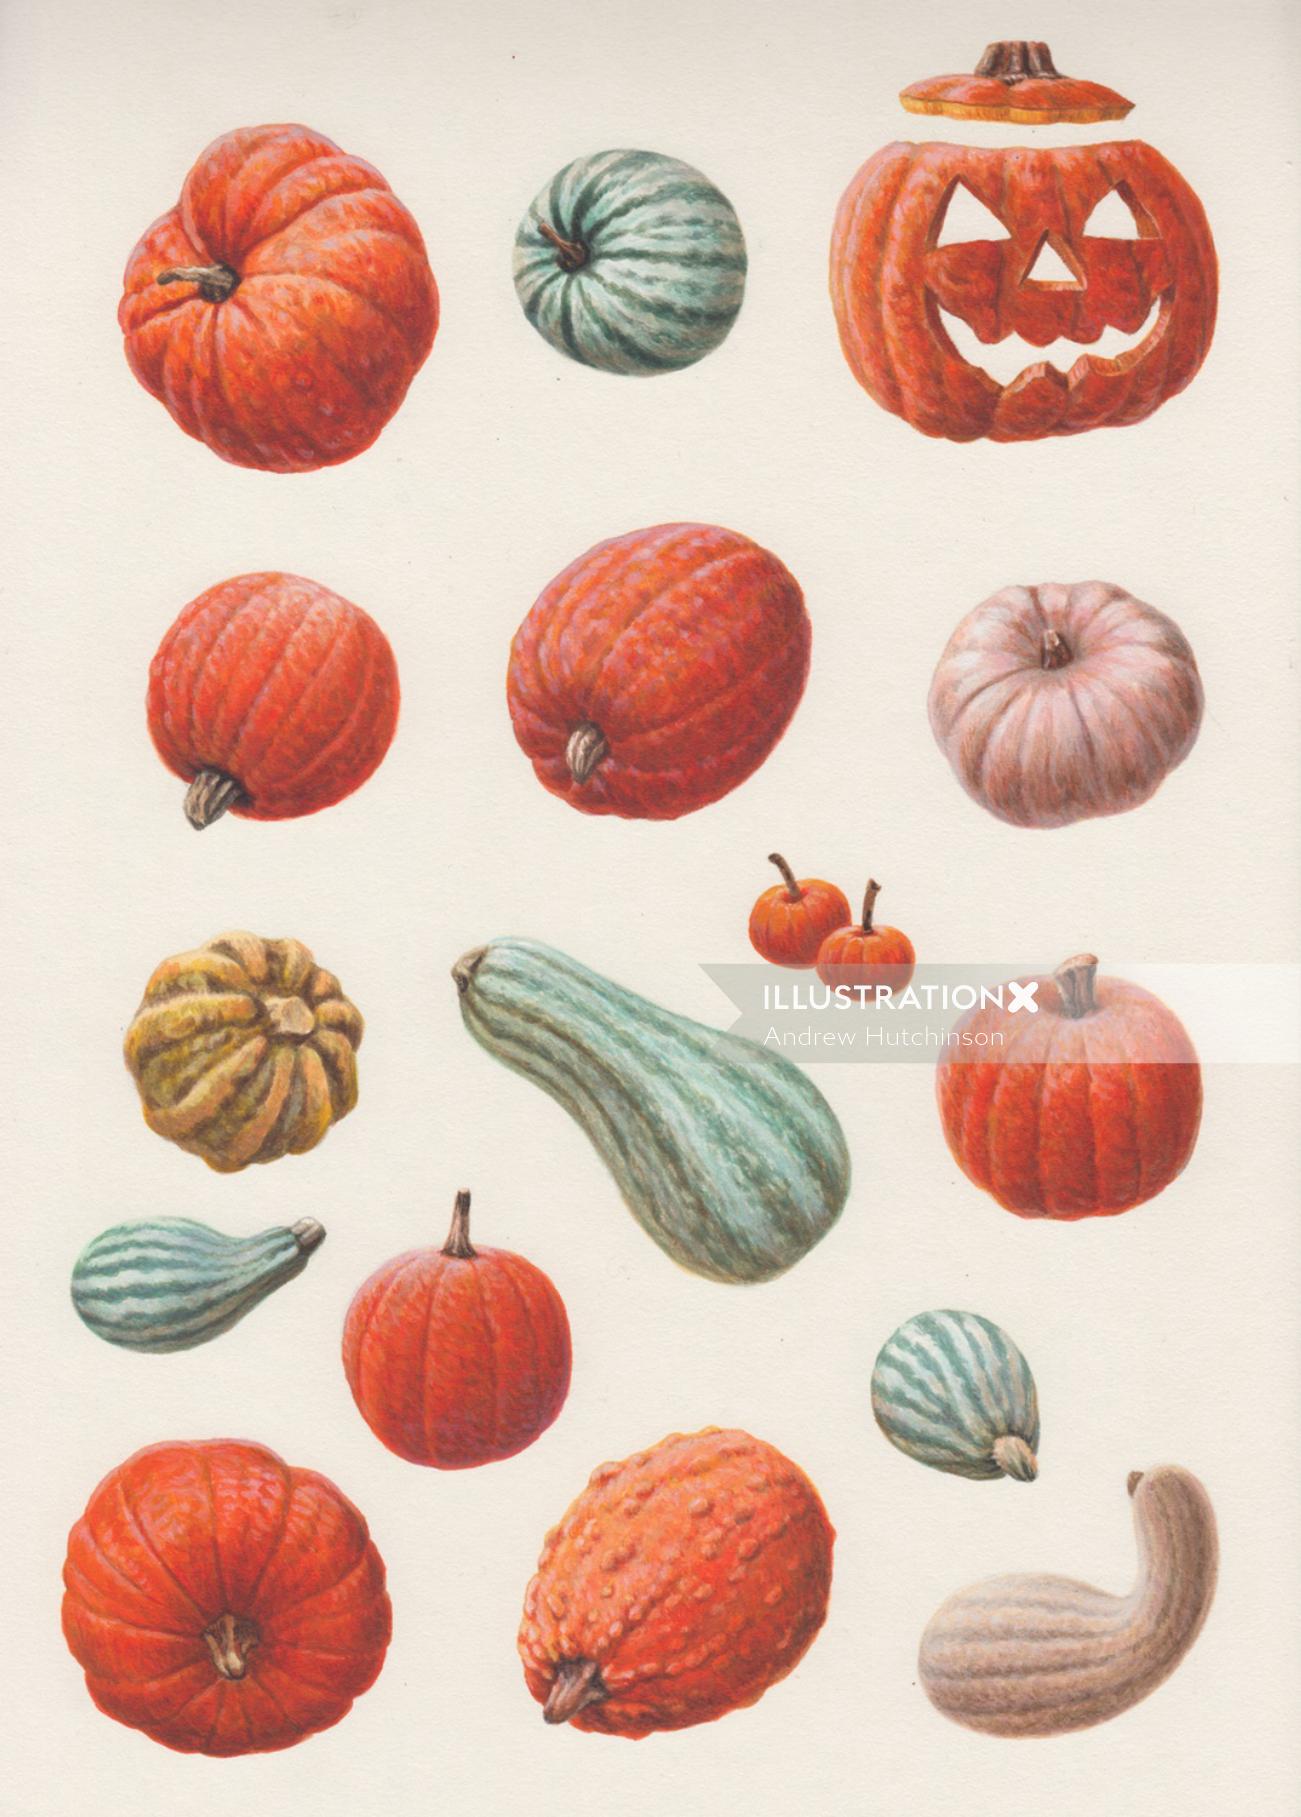 A visual representation of the many sorts of pumpkins